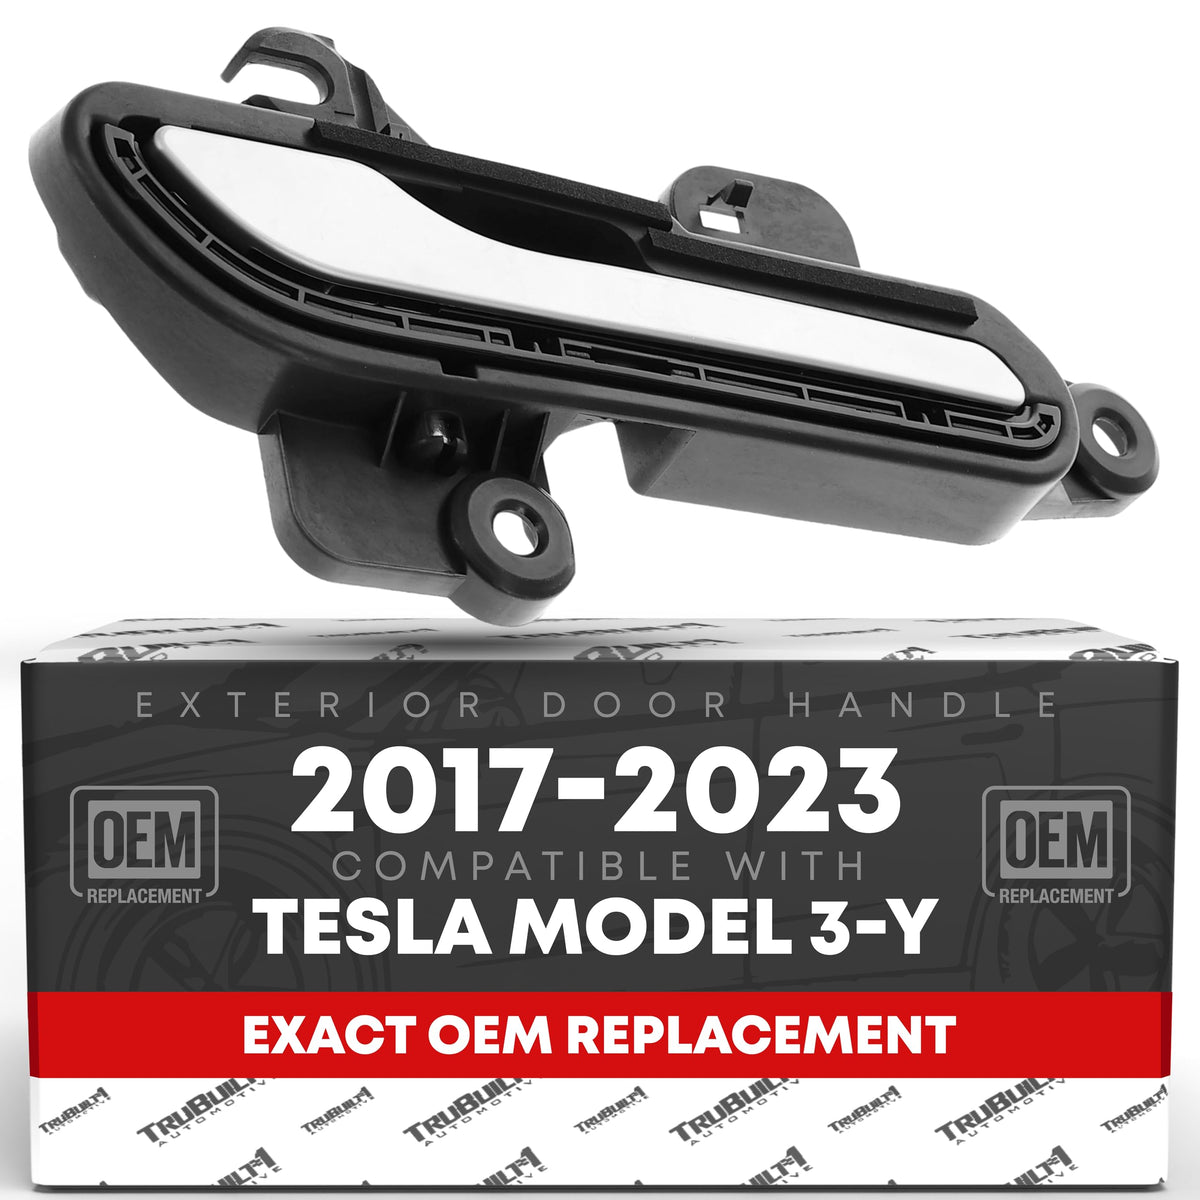 TRUBUILT1 AUTOMOTIVE Exterior Door Handle, Front/Rear Right - Compatible with 2017-2022 Tesla Model 3, 2020-2023 Model Y - Silver Finish - OEM 1081832-00-J, 1528115-00-B, 15758